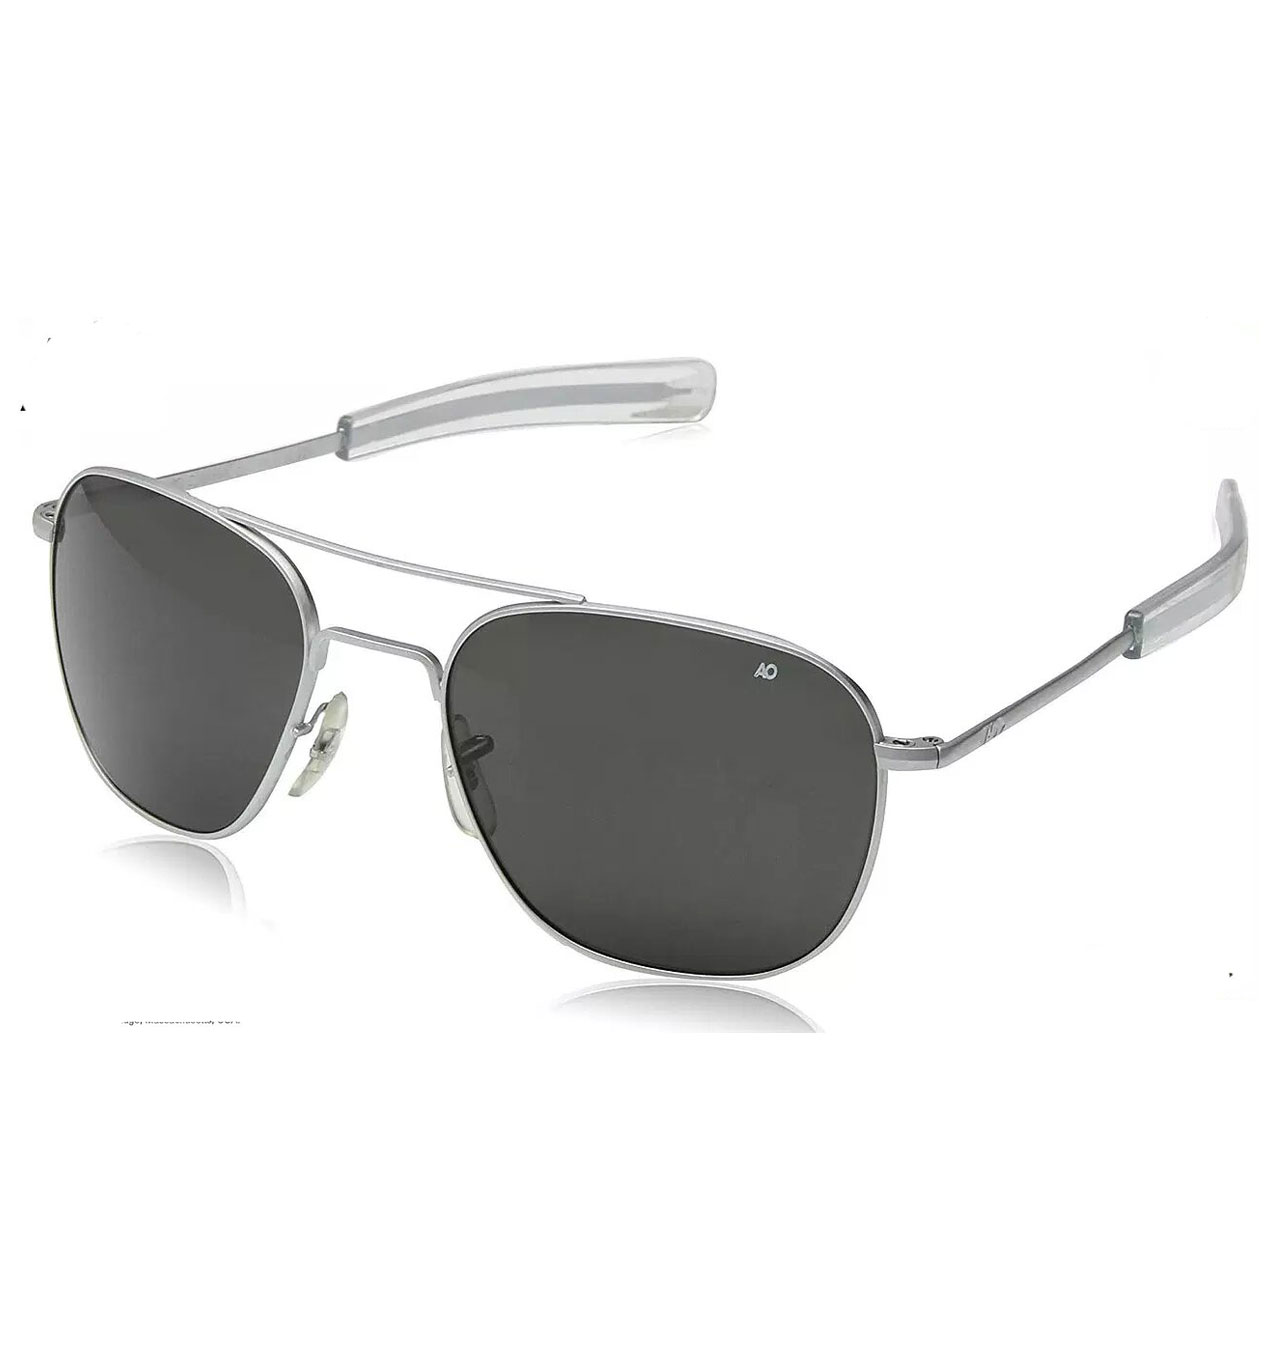 AO Eyewear - Original Pilot Sunglasses Polarized - Matt Chrome